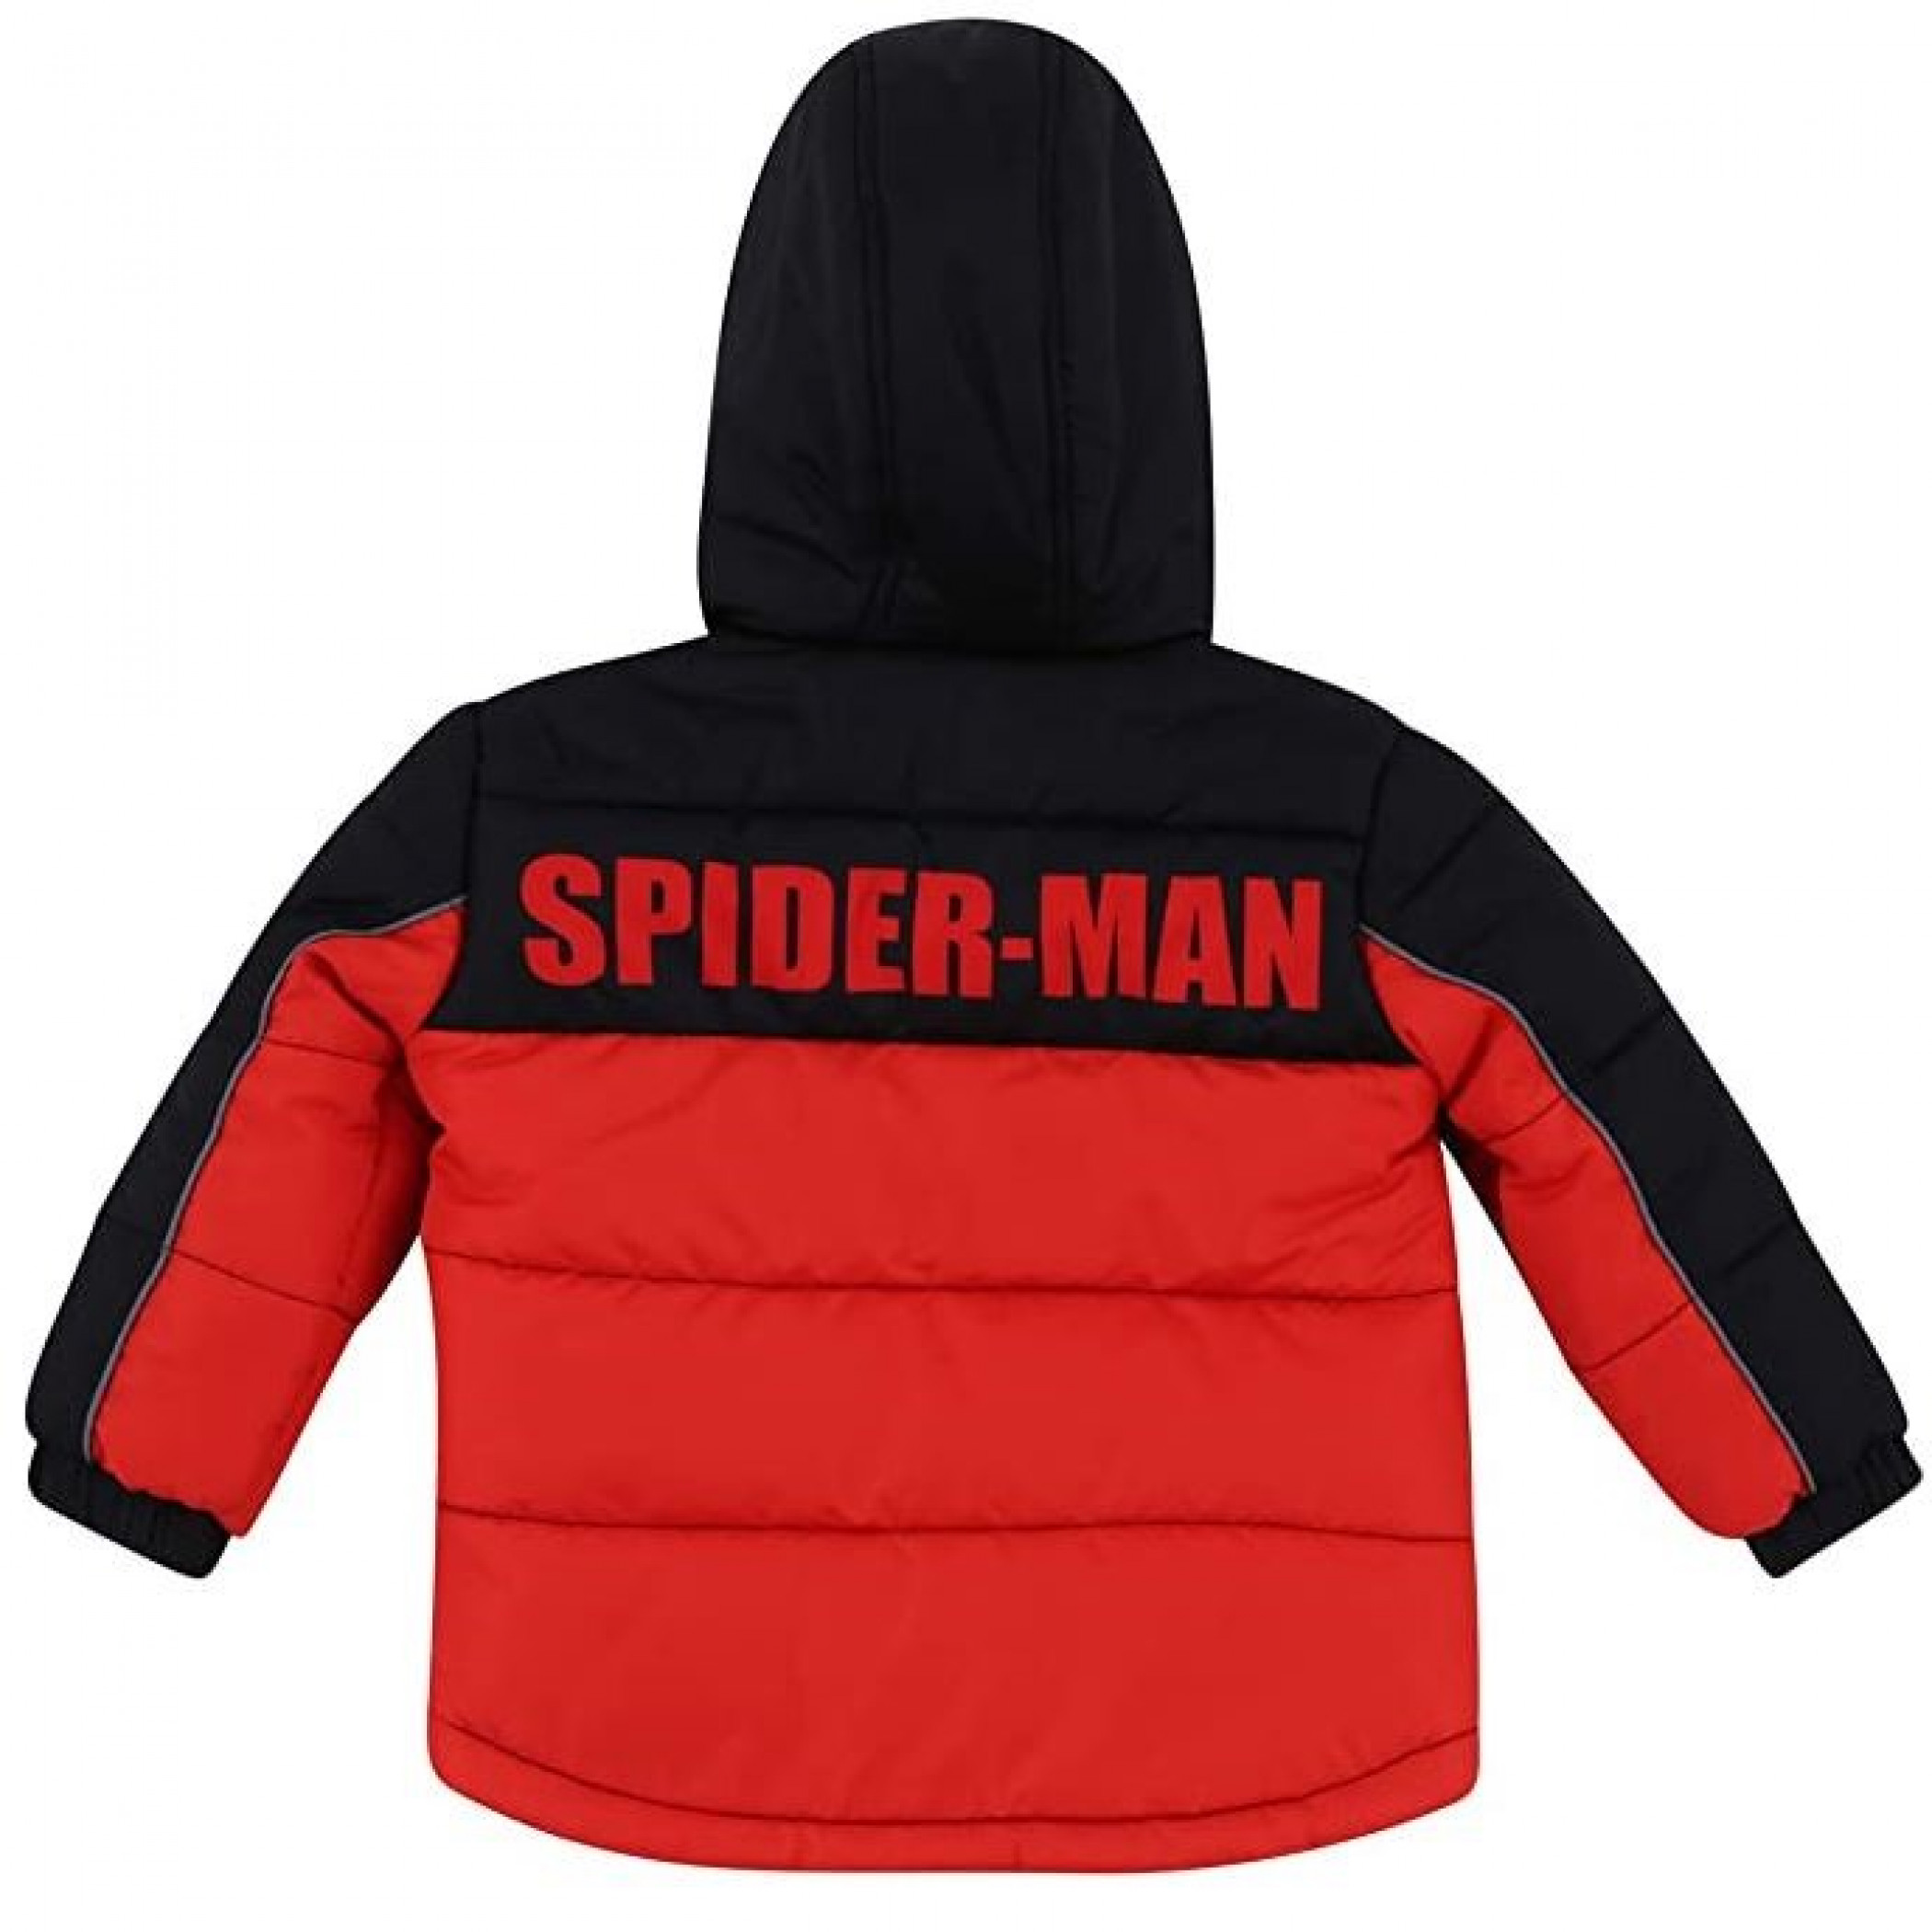 Spider-Man Face Kids Coat